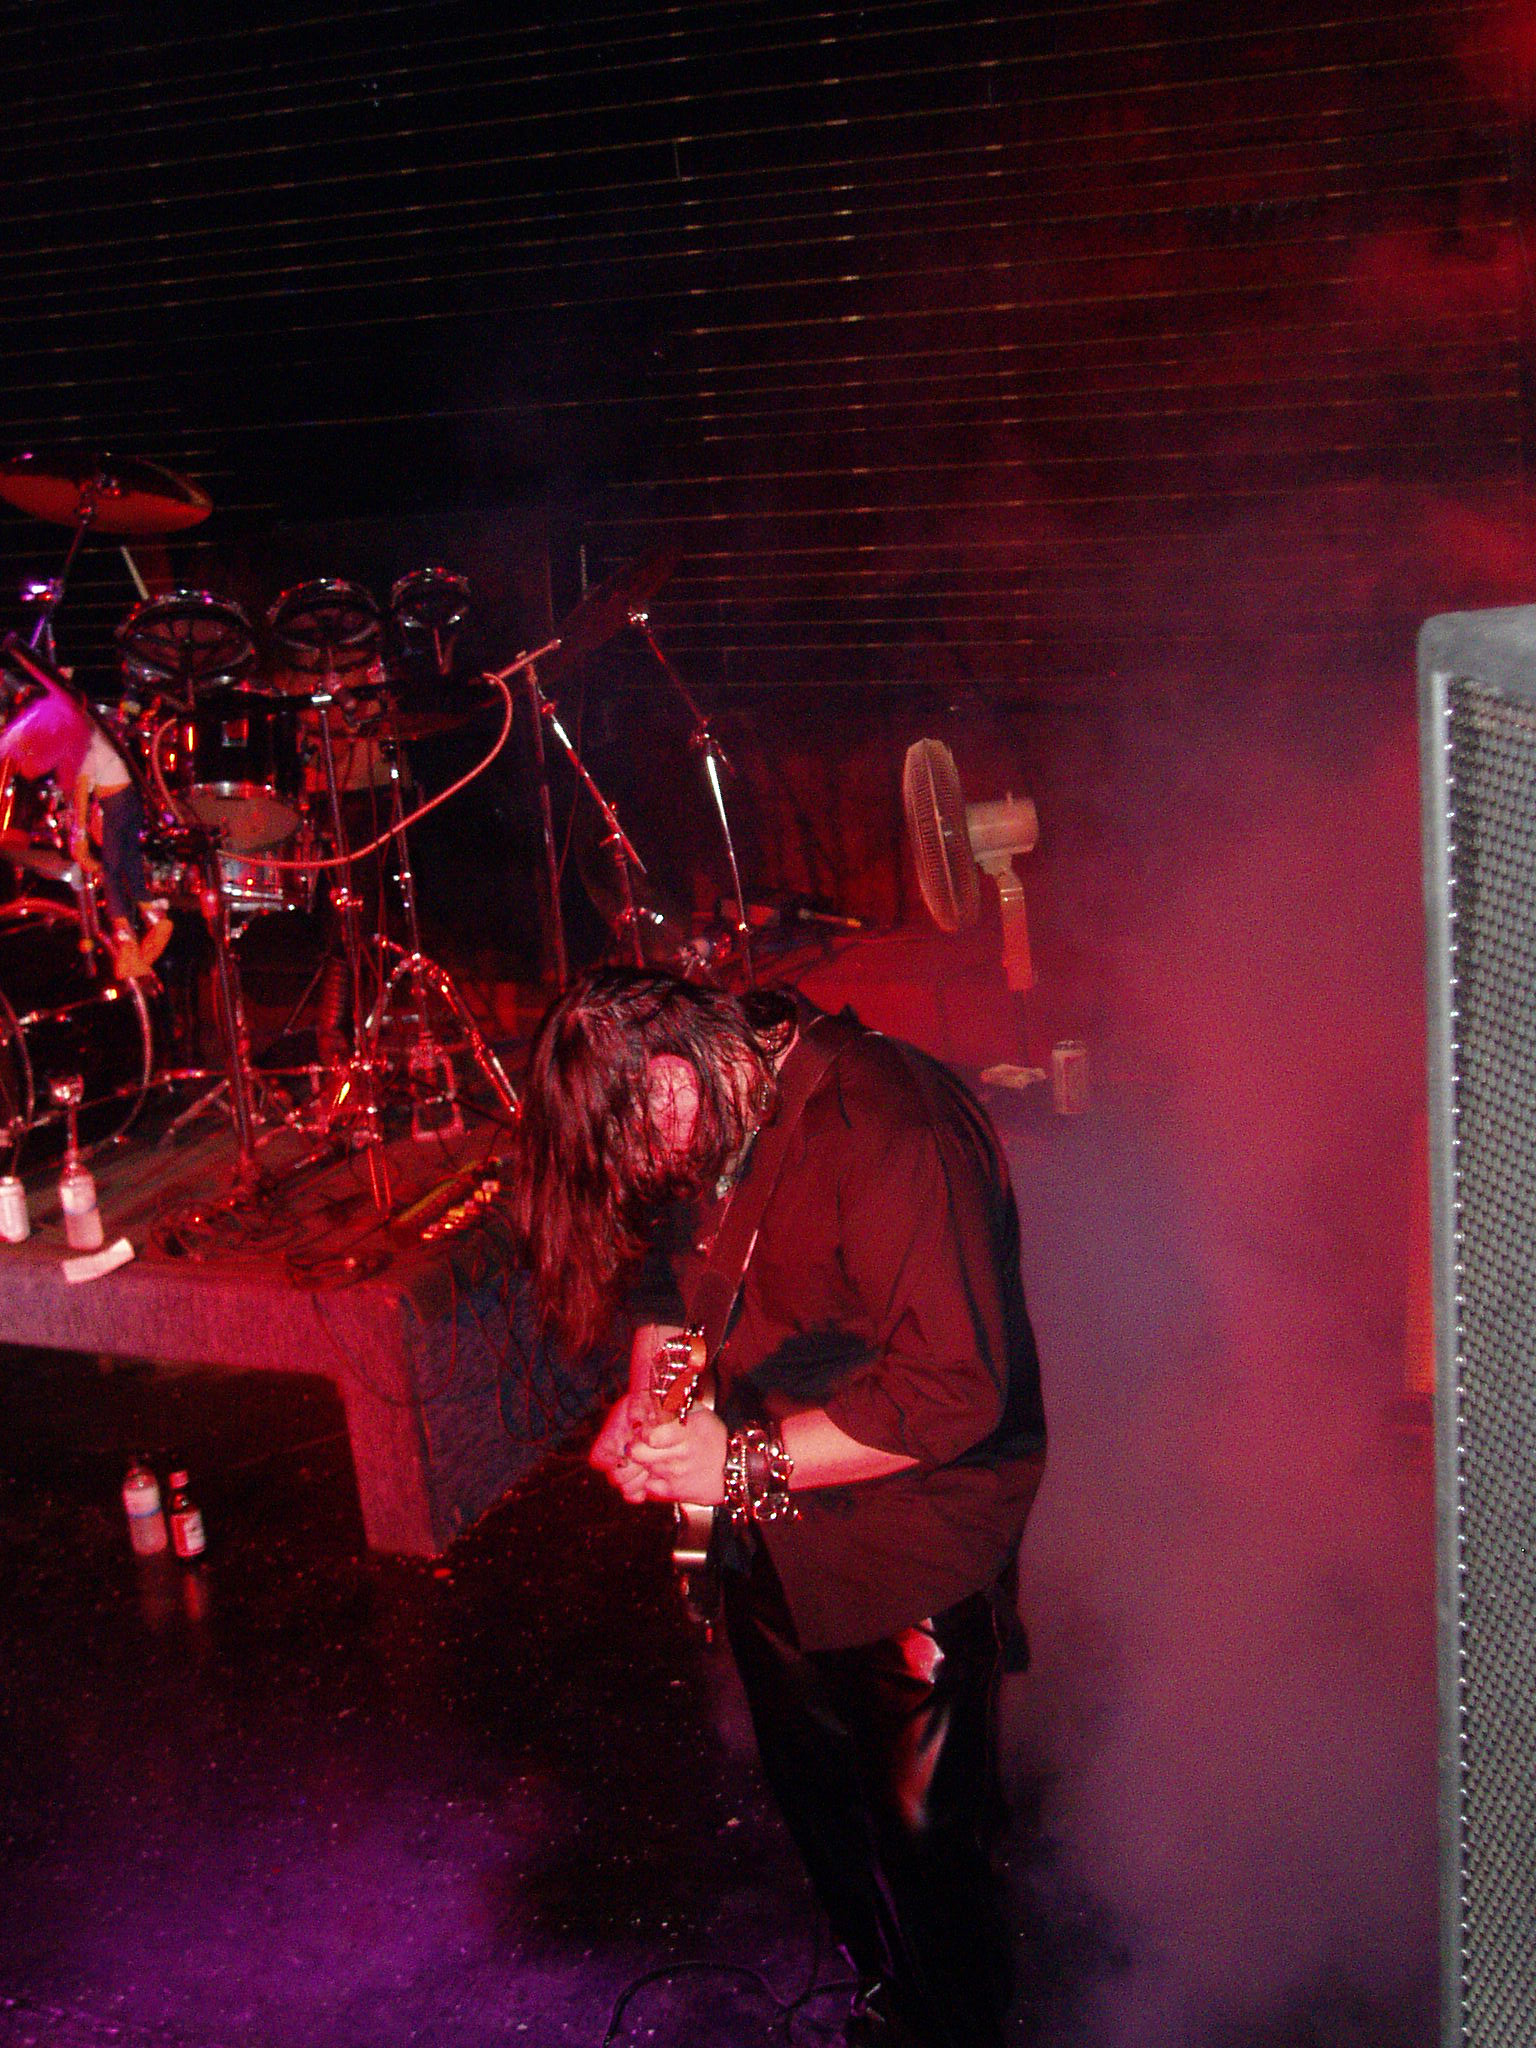 Joe Arthur performing with Osiris Rising in concert - Culture Room - Fort Lauderdale, FL - January 2, 2004 - Photo by Brenda Vorisek